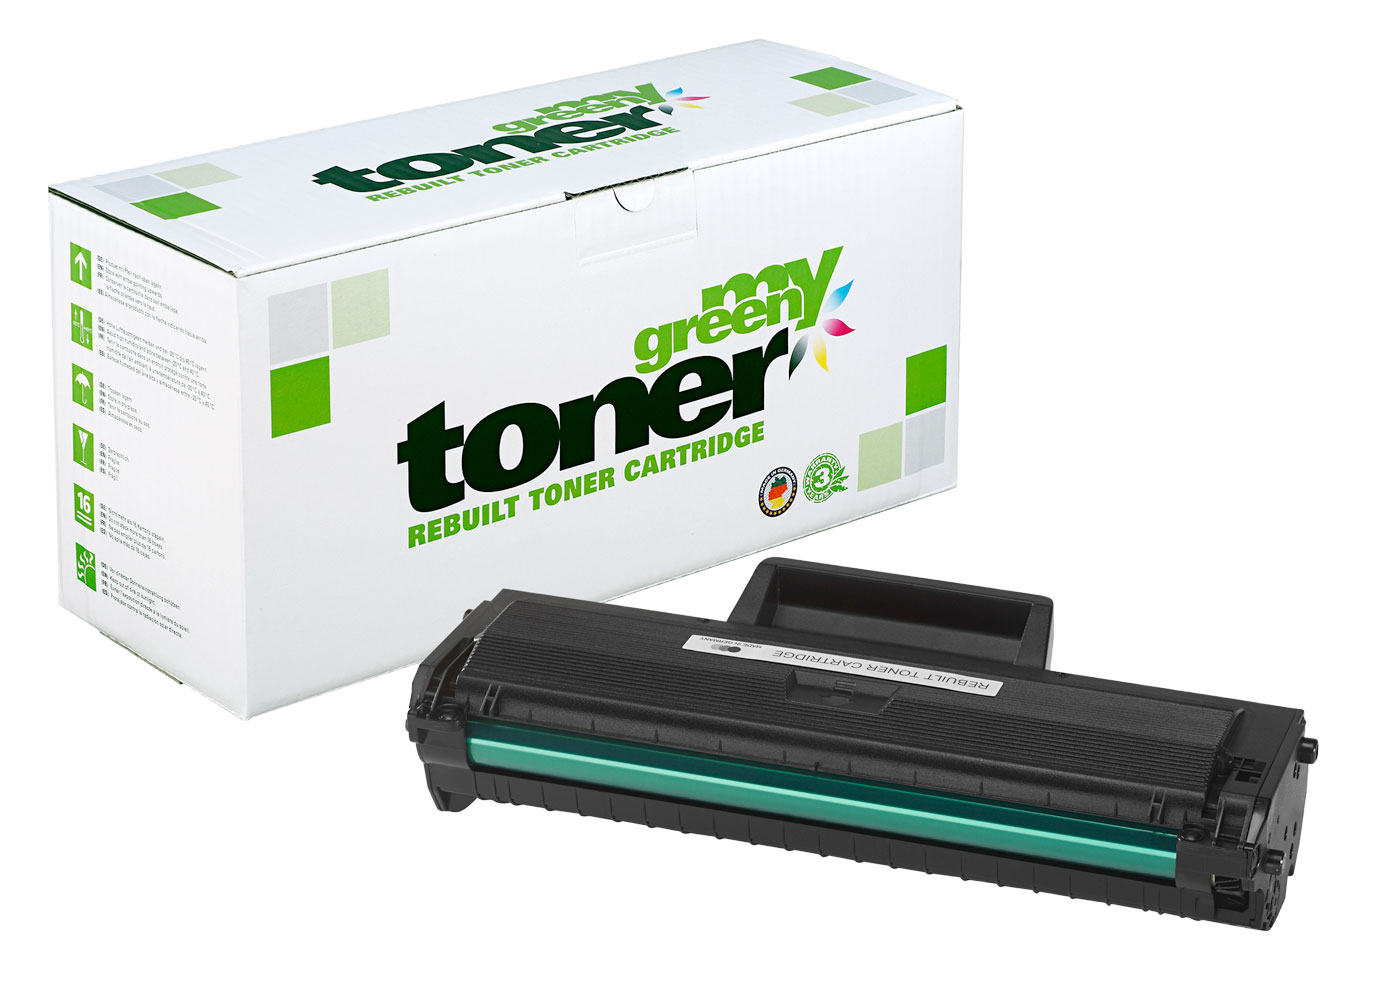 Rebuilt toner cartridge for HP LaserJet 107, MFP 135/137/138